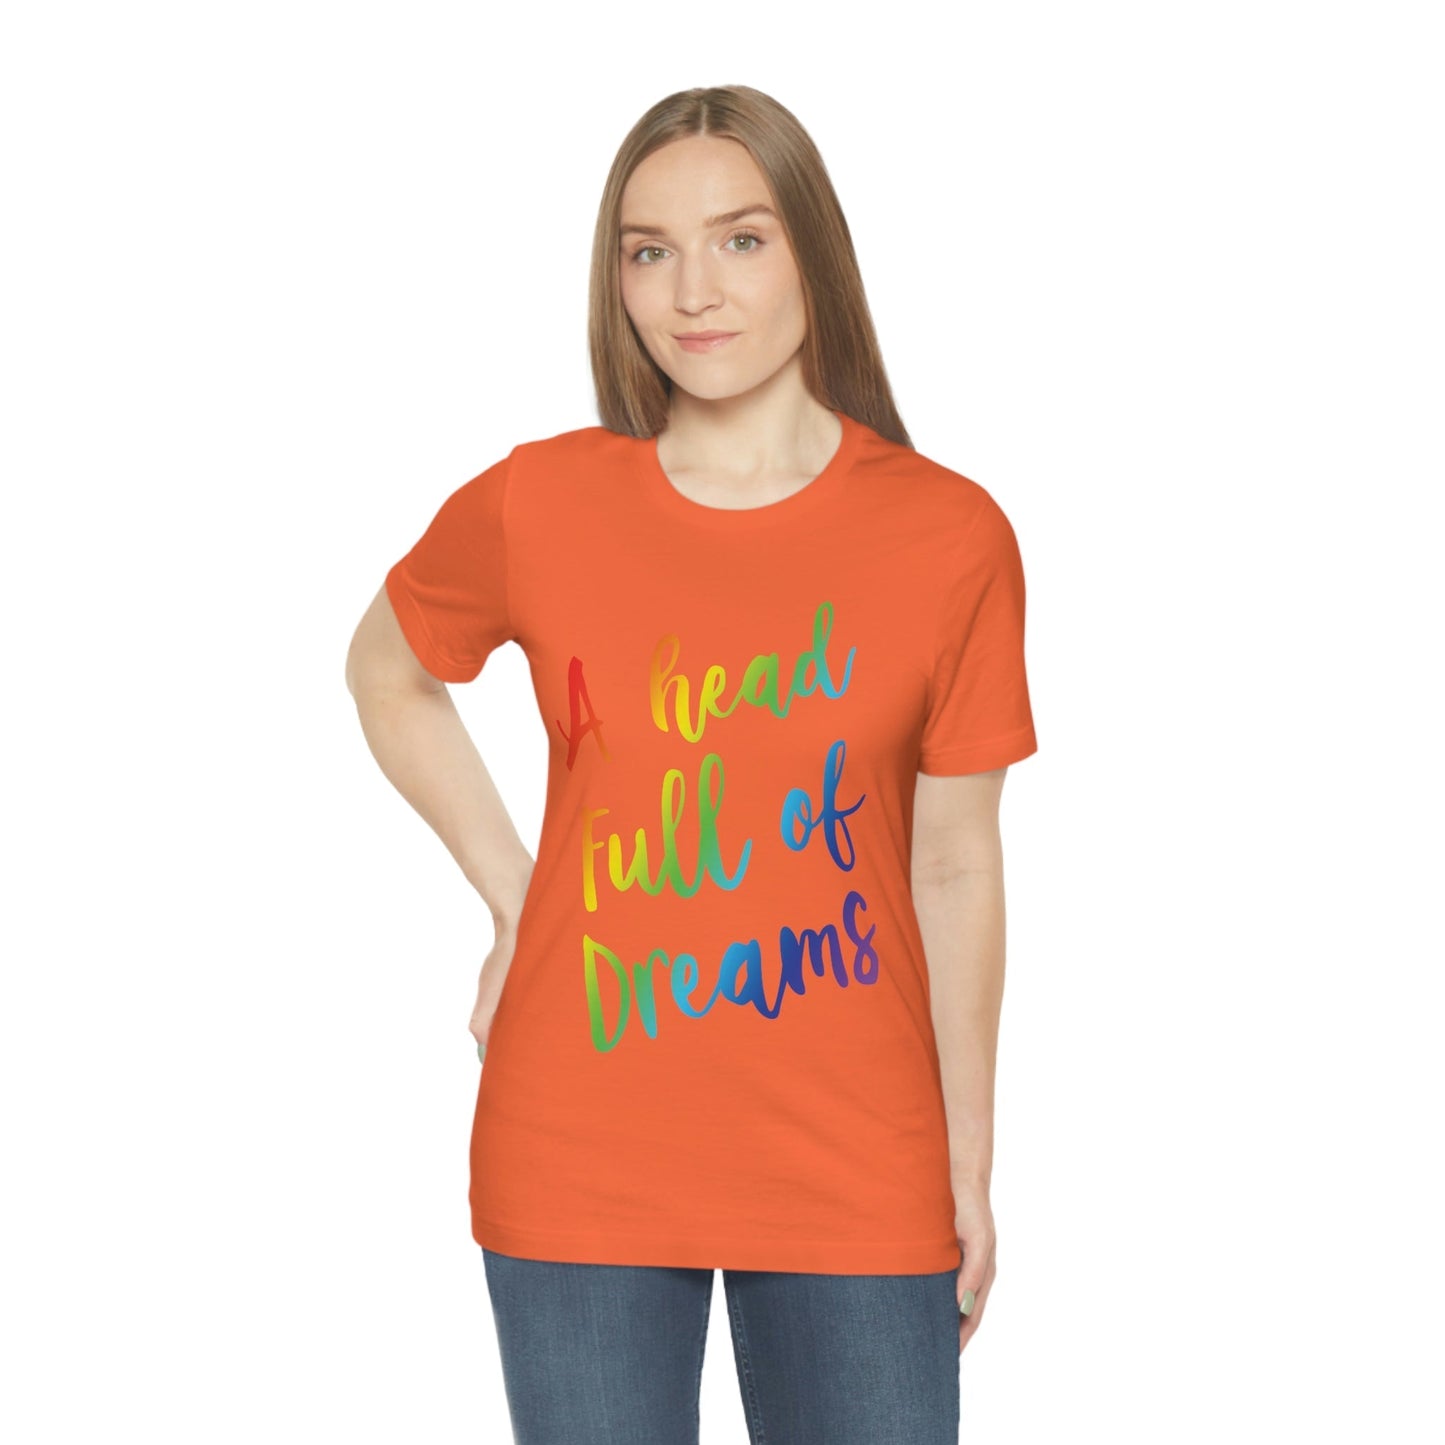 A head full of dreams Motivation Inspirational Slogan LGBT Unisex Jersey Short Sleeve T-Shirt Ichaku [Perfect Gifts Selection]